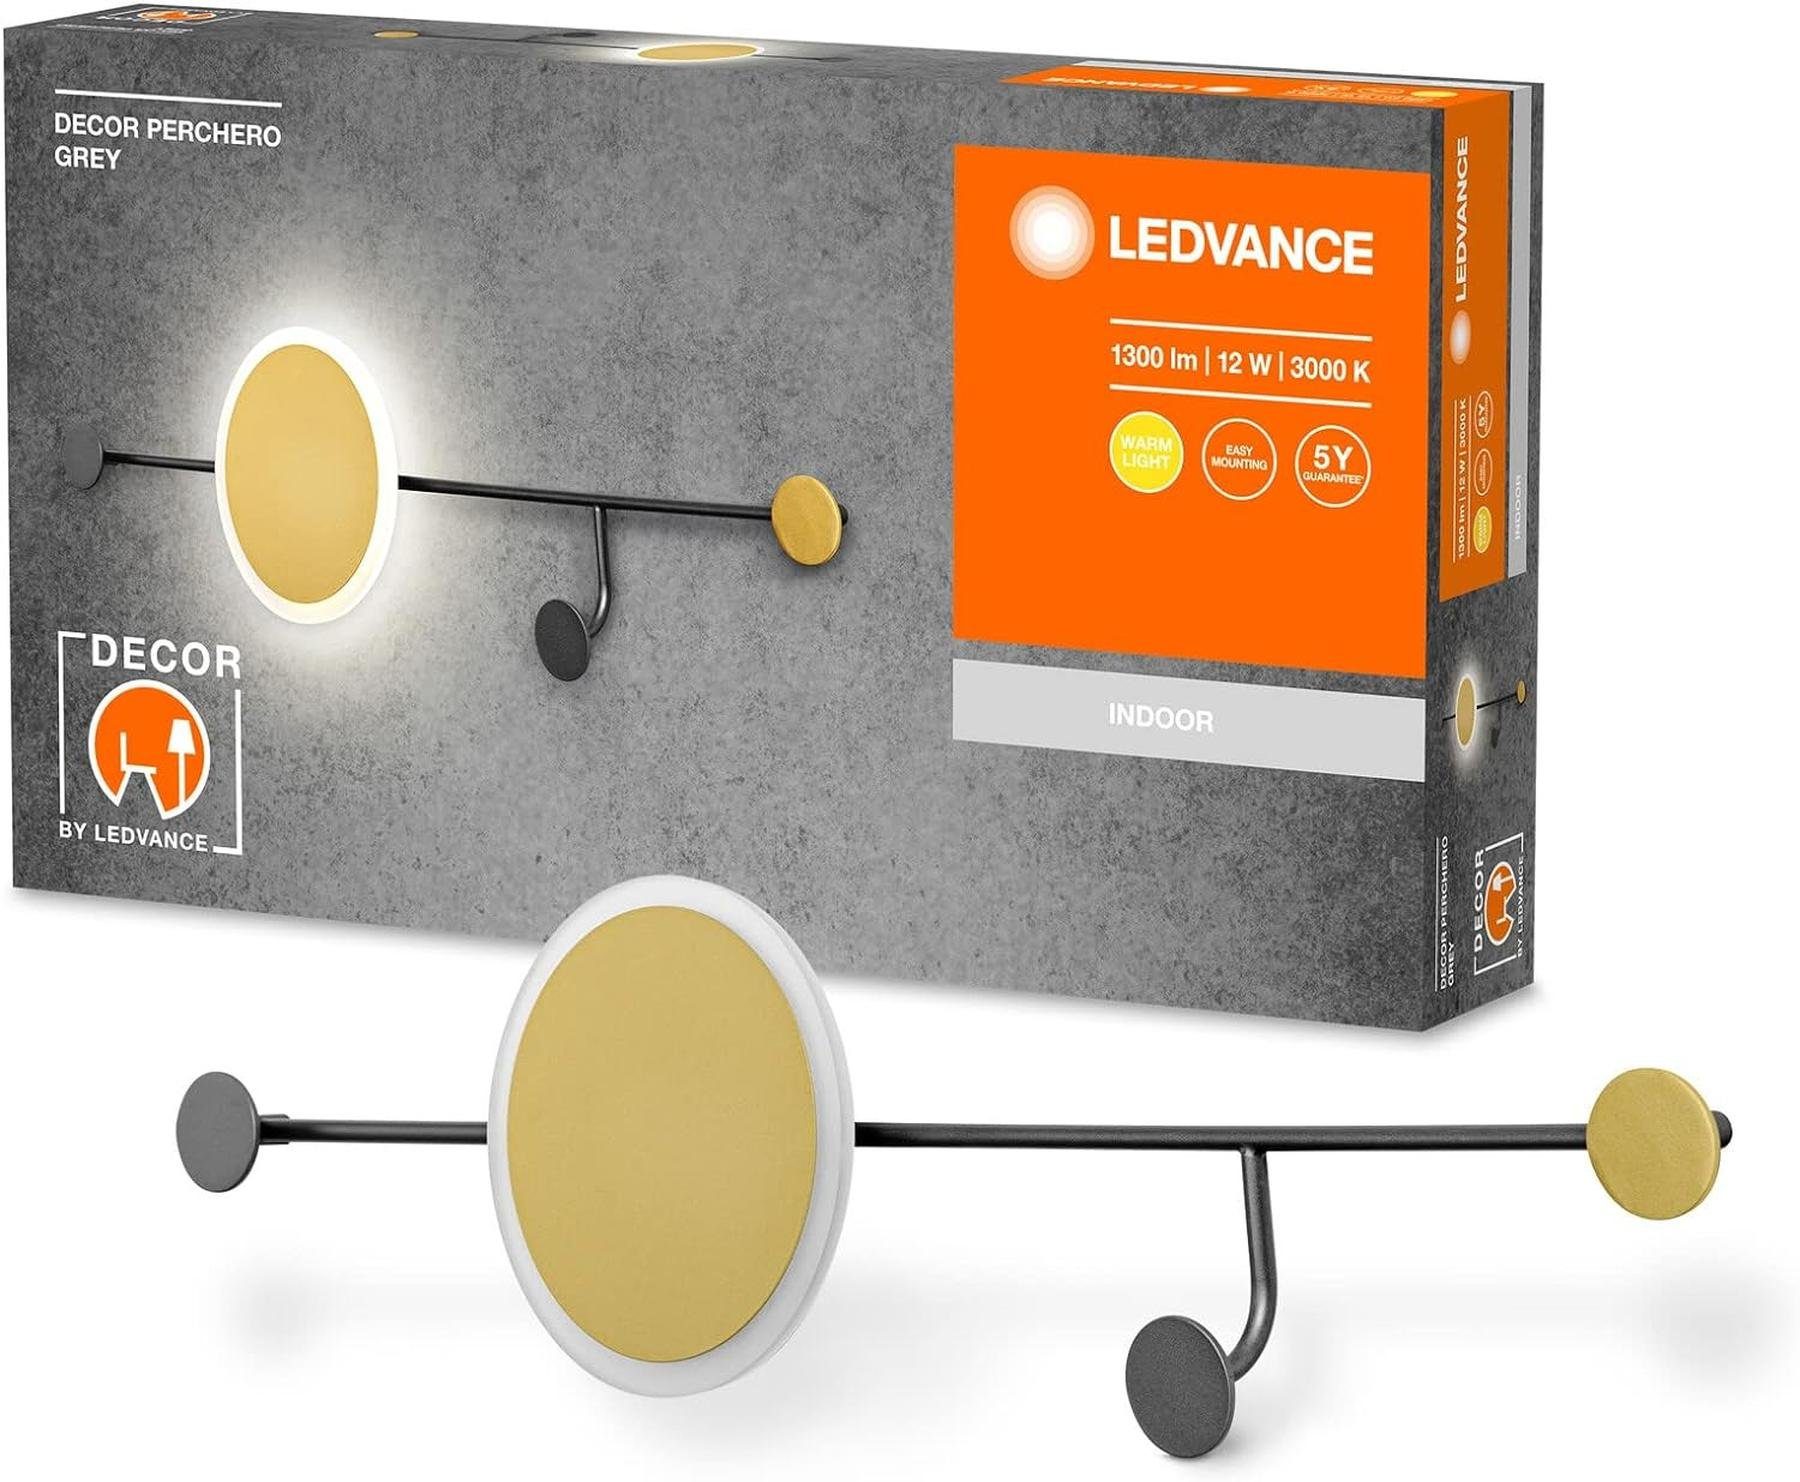 warmweißer, Wandleuchte Perchero LEDVANCE Ledvance DECOR Nutzung, Garderobenhaken770mm,grau,kombinierte Energieeffizient LED